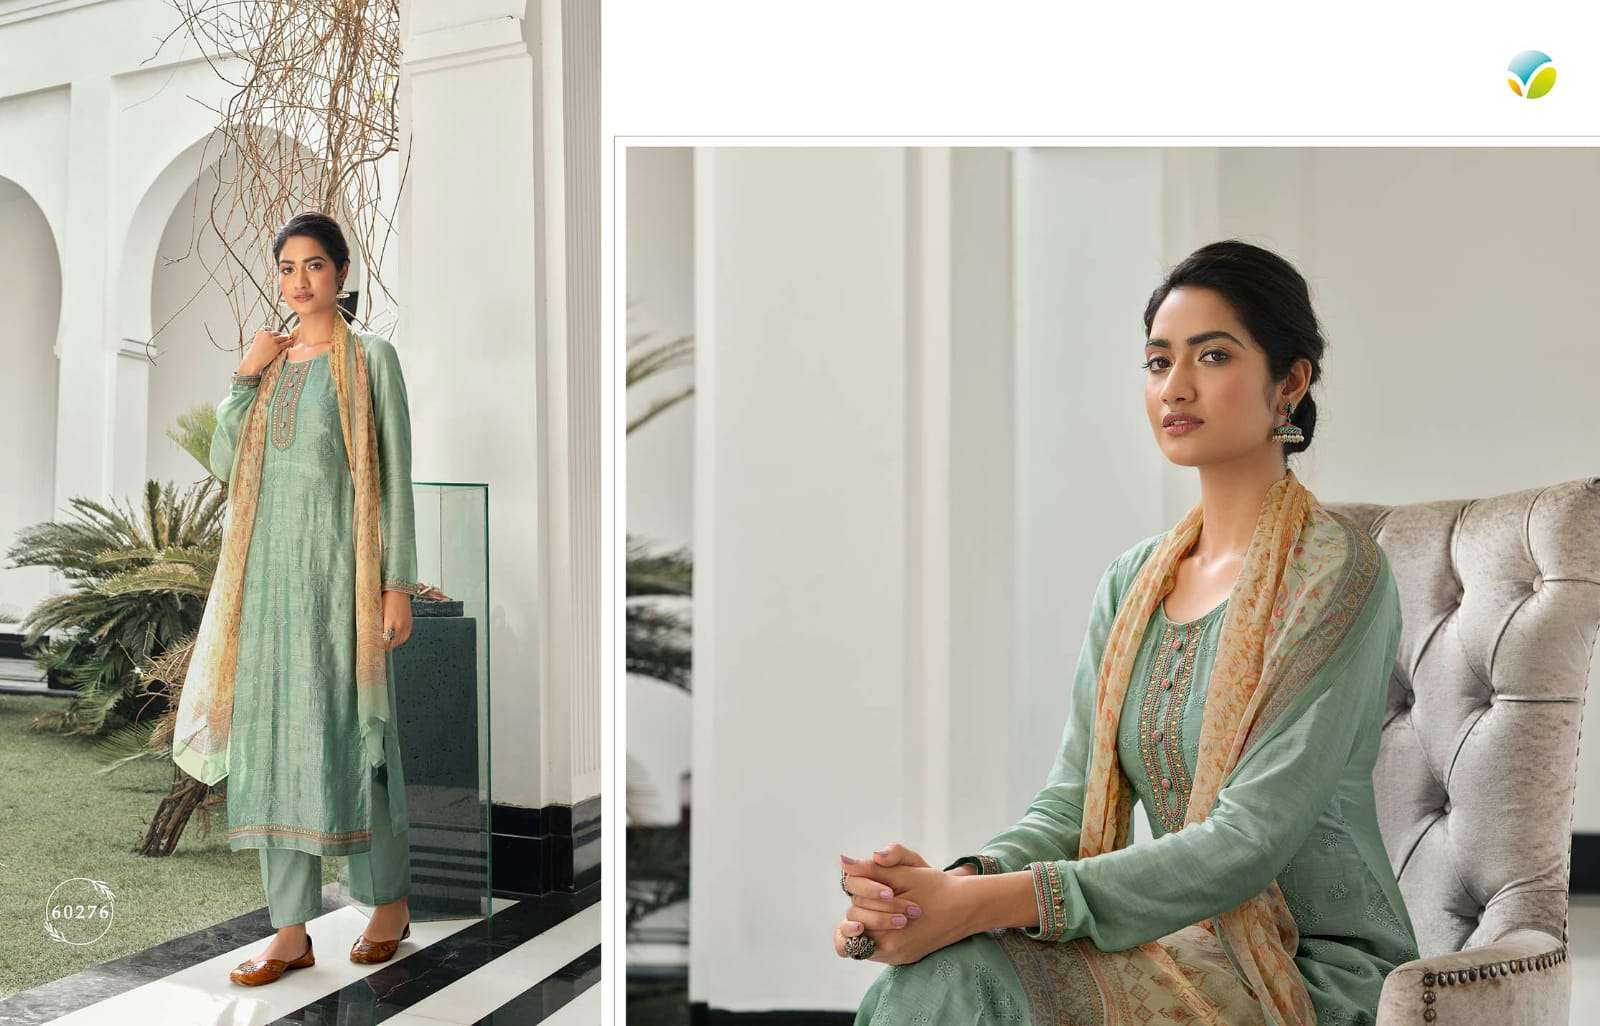 vinay fashion kervin geetanjali salwar kameez catalogue pratham exports